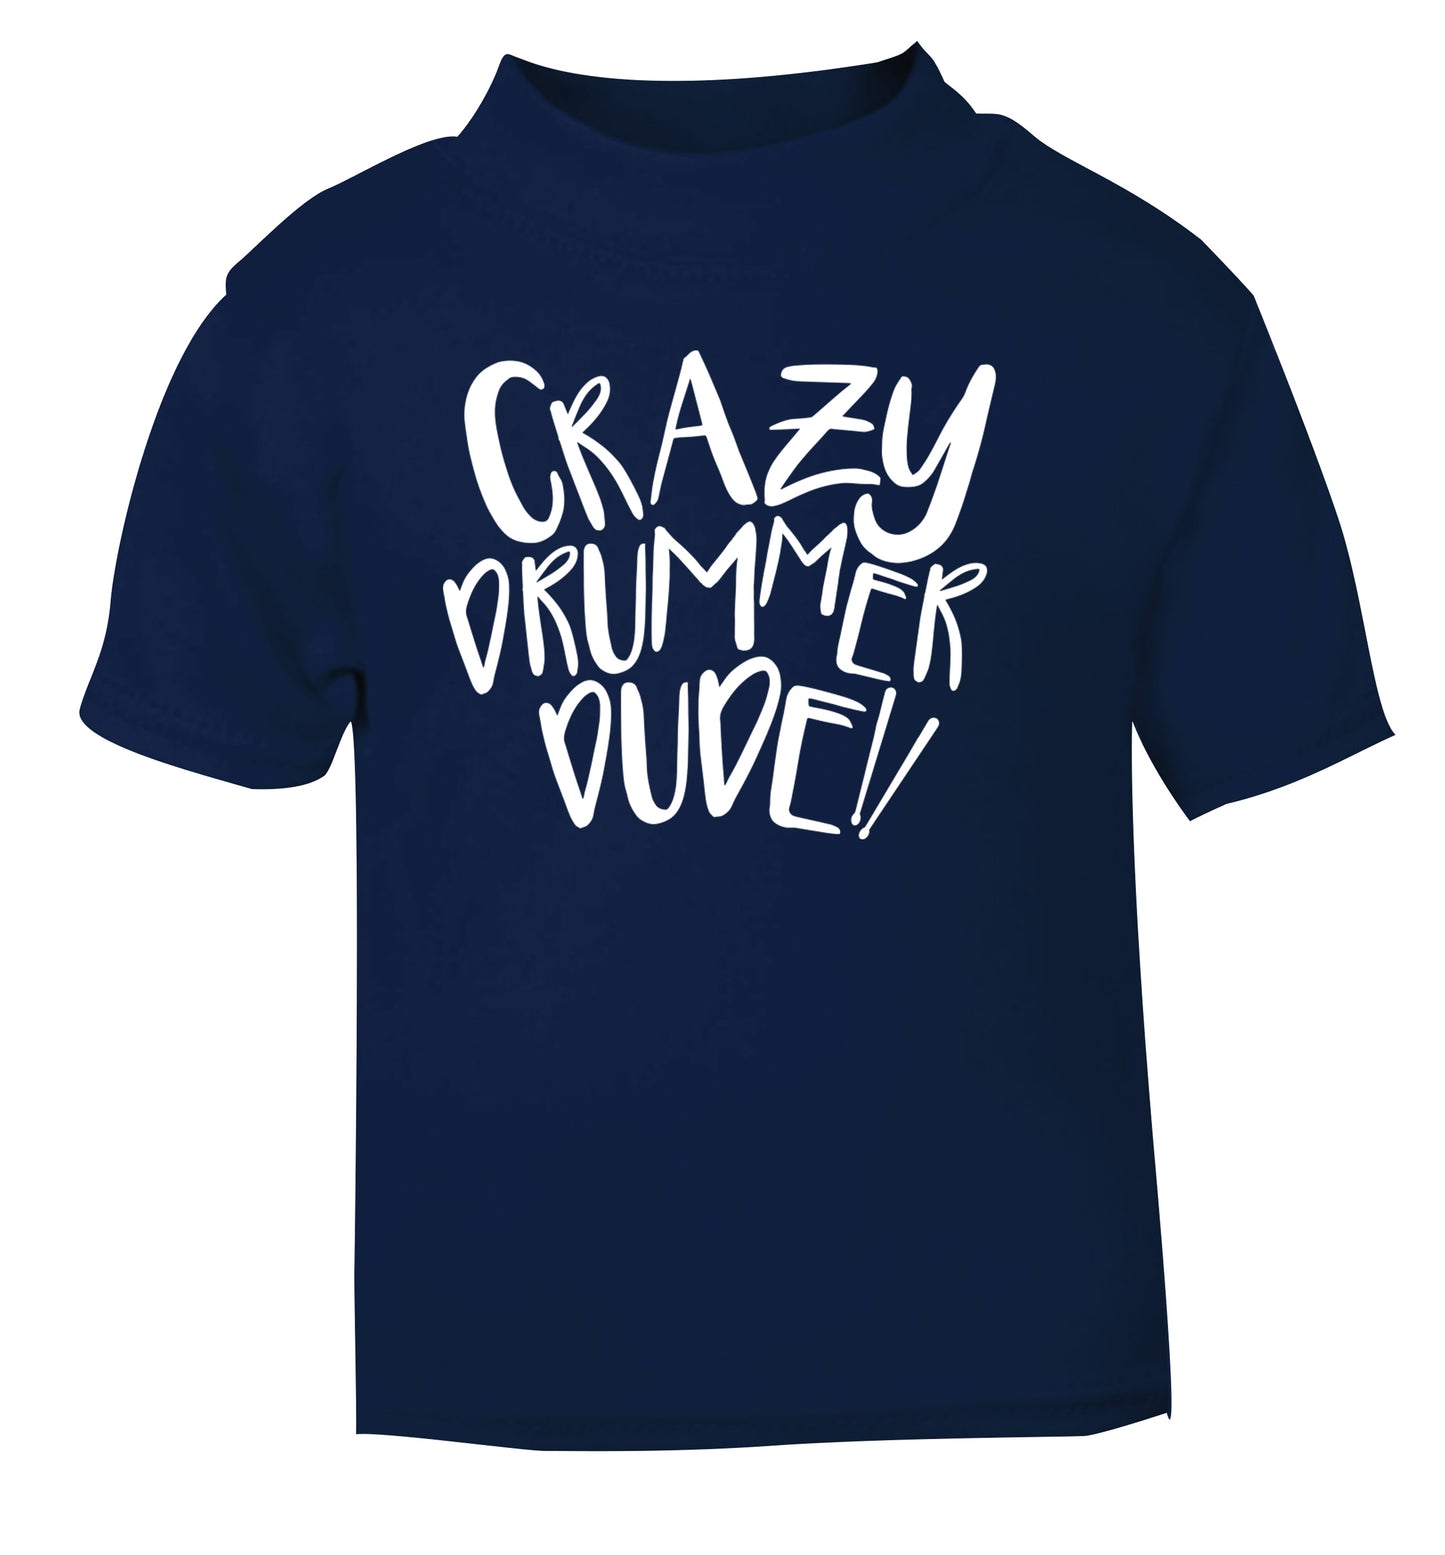 Crazy drummer dude navy Baby Toddler Tshirt 2 Years